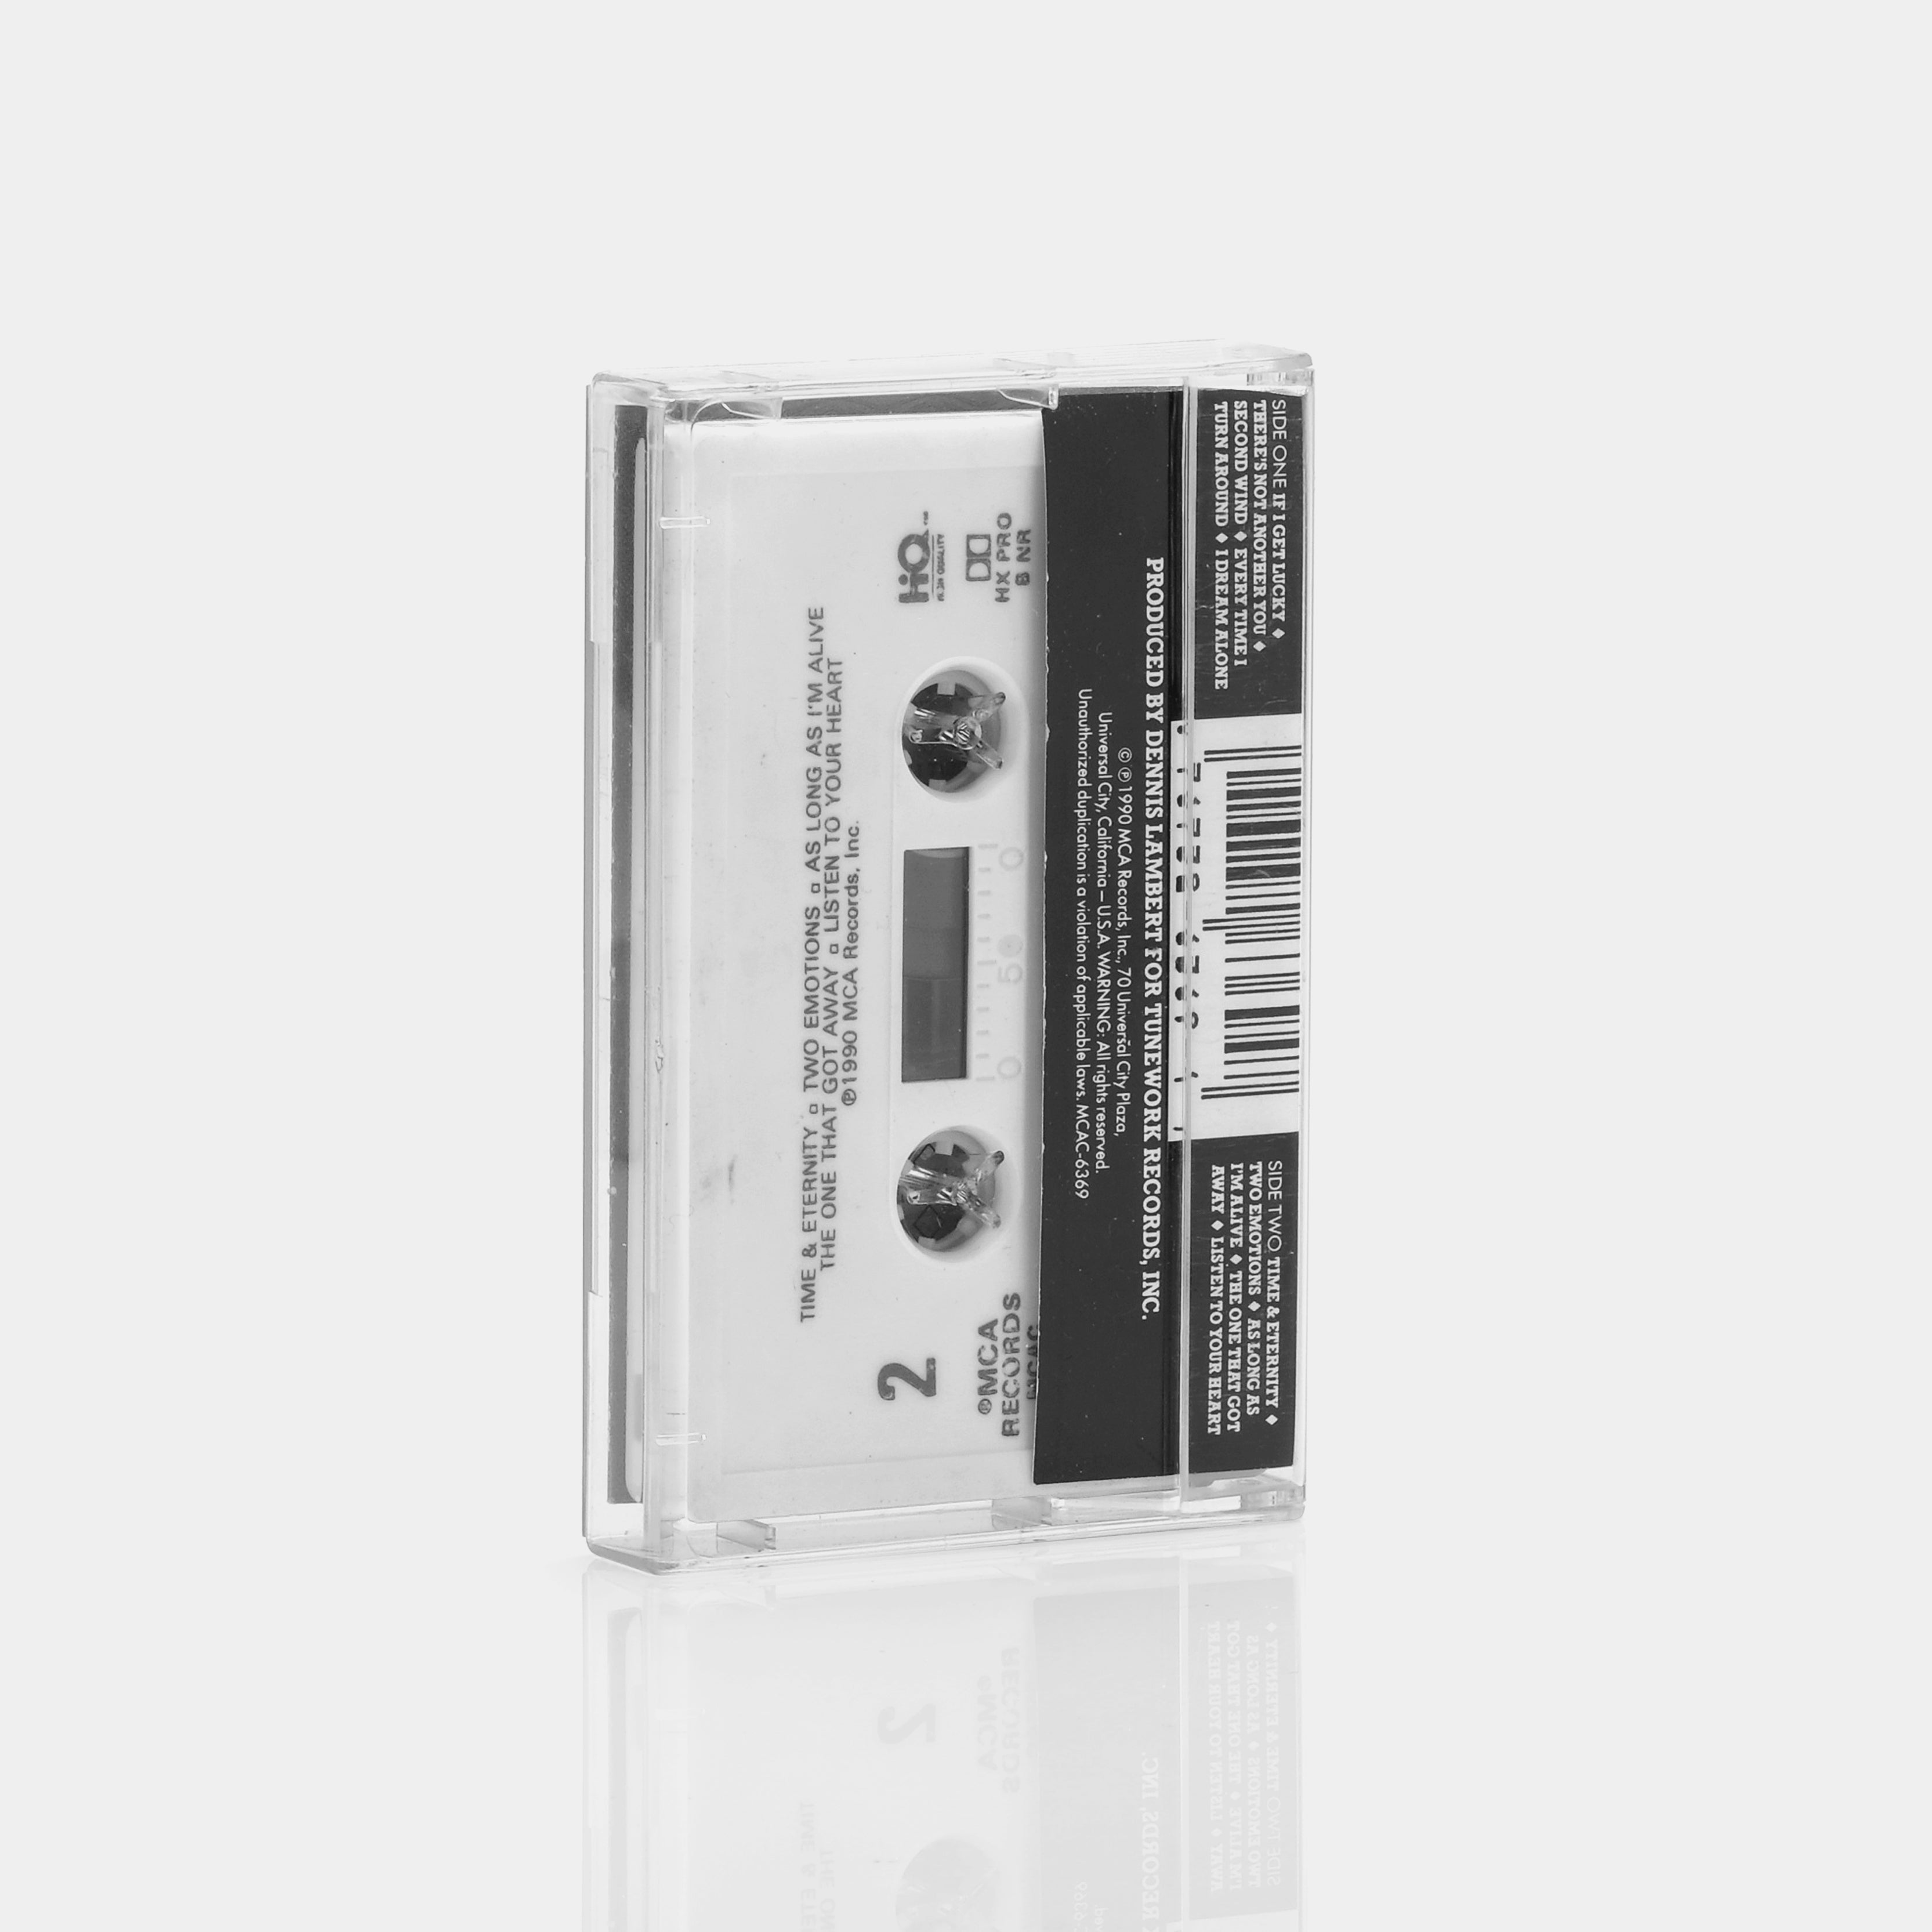 Little River Band - Get Lucky Cassette Tape